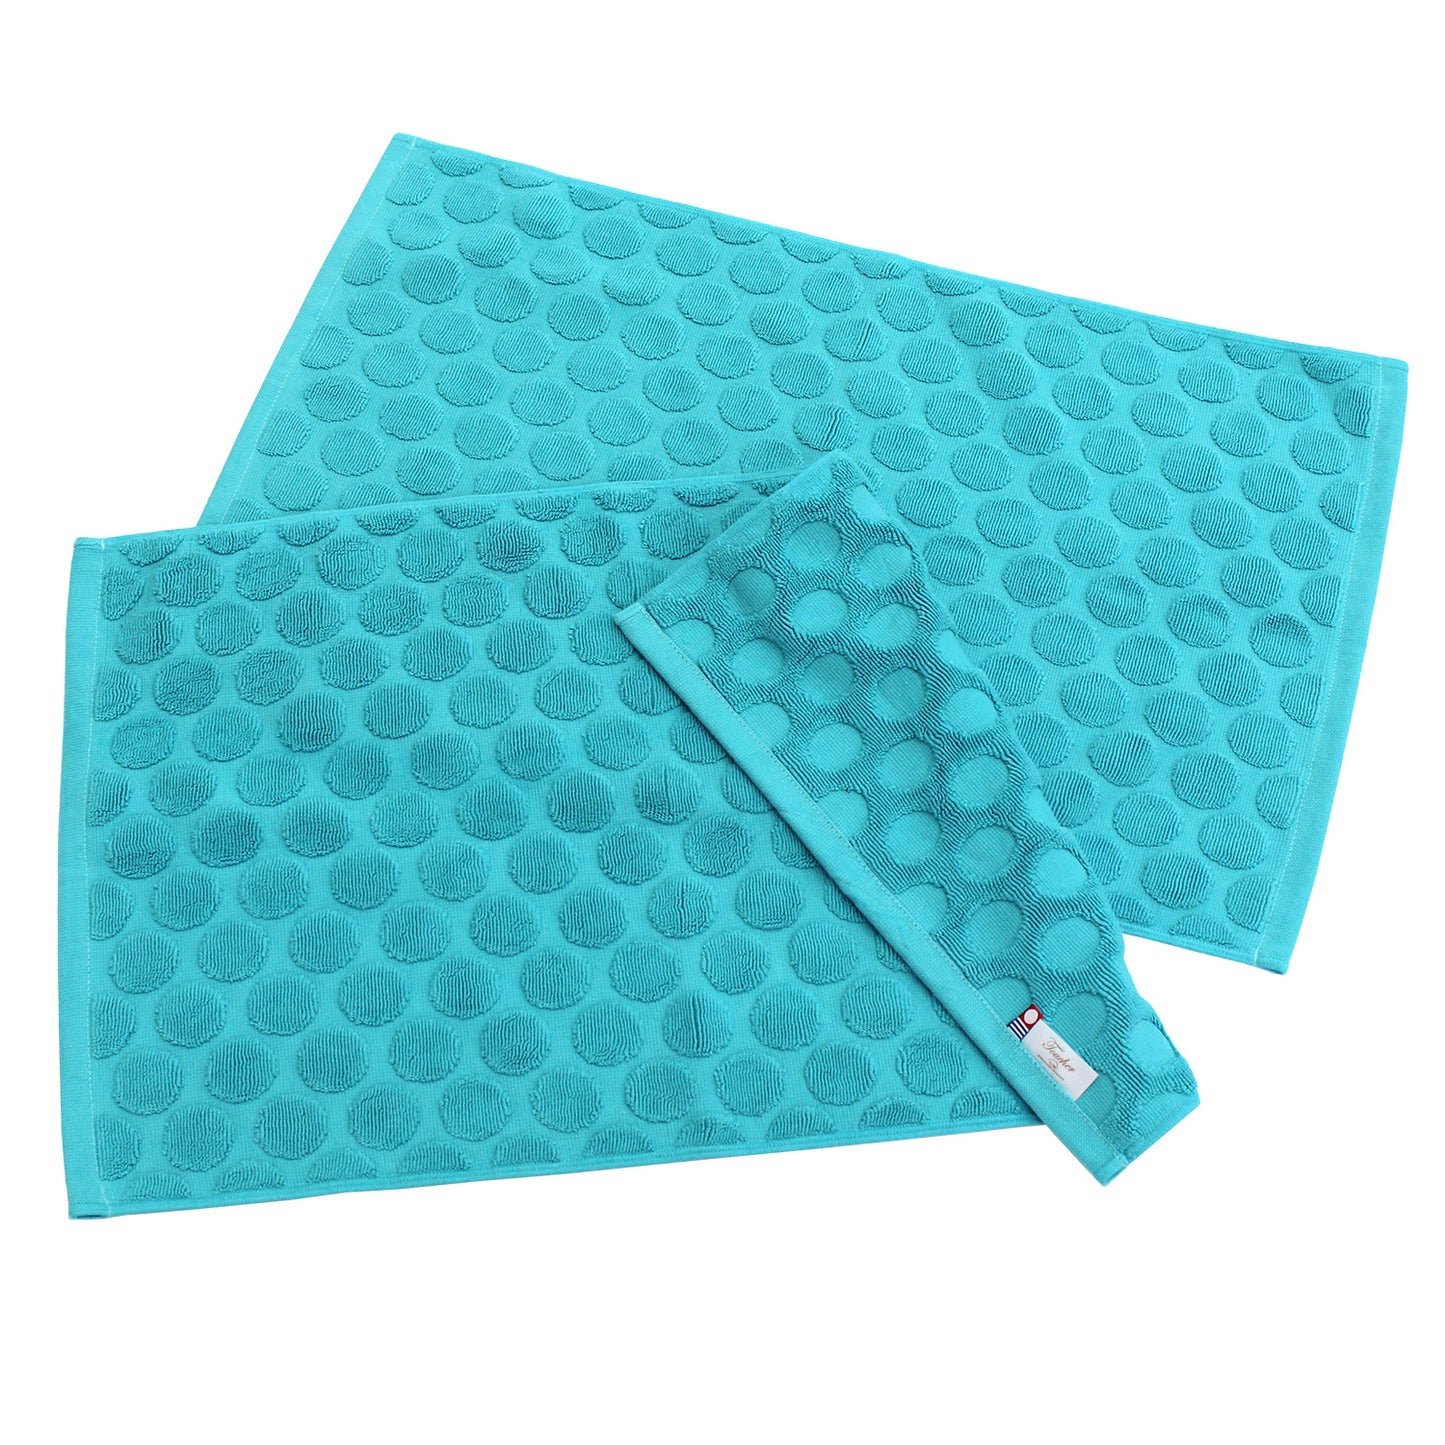 Hiorie Imabari Dot Water-Absorption Bath Mat 2 Sheets Cotton 100% Japan